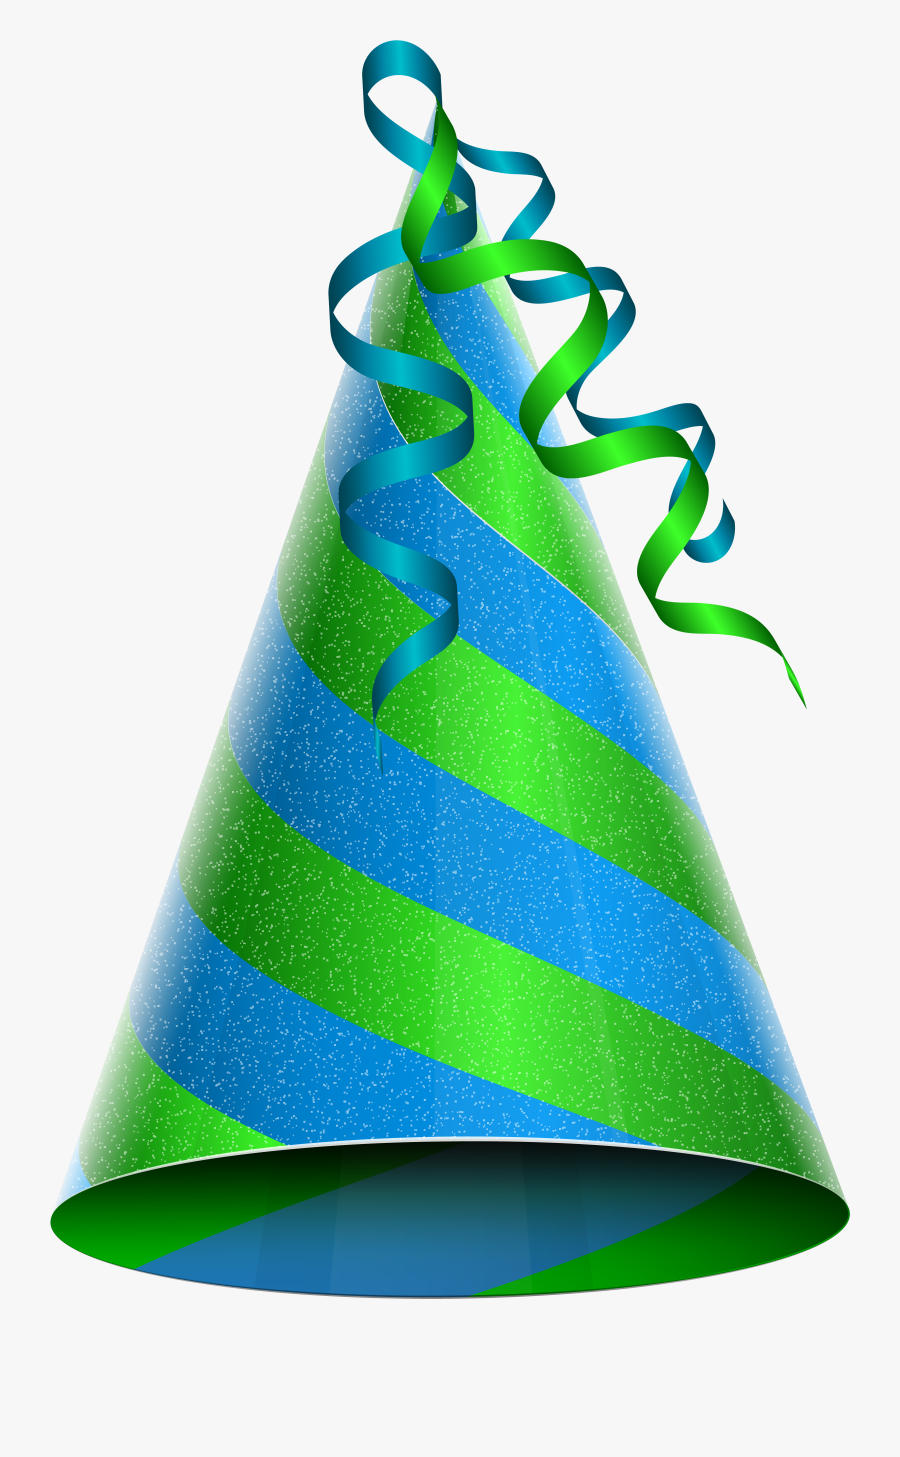 Birthday Party Hat Green Blue Png Clip Art Imageu200b - Birthday Cap Png Hd, Transparent Clipart